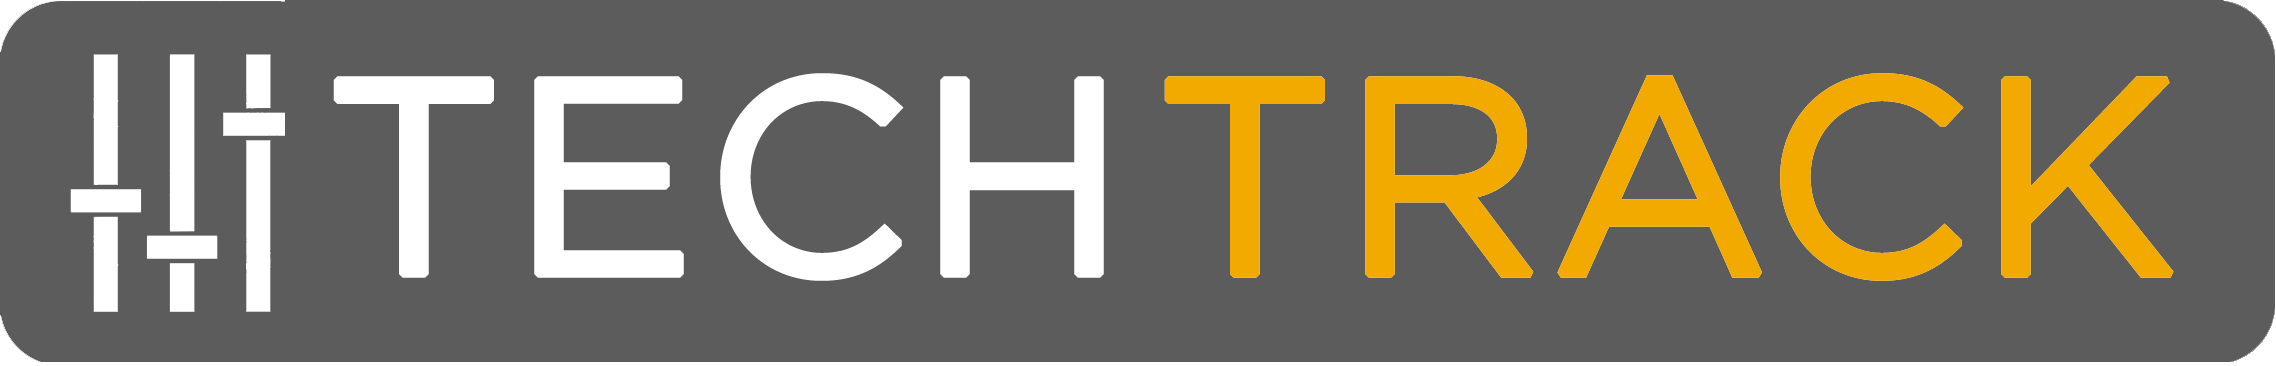 TechTrack logo